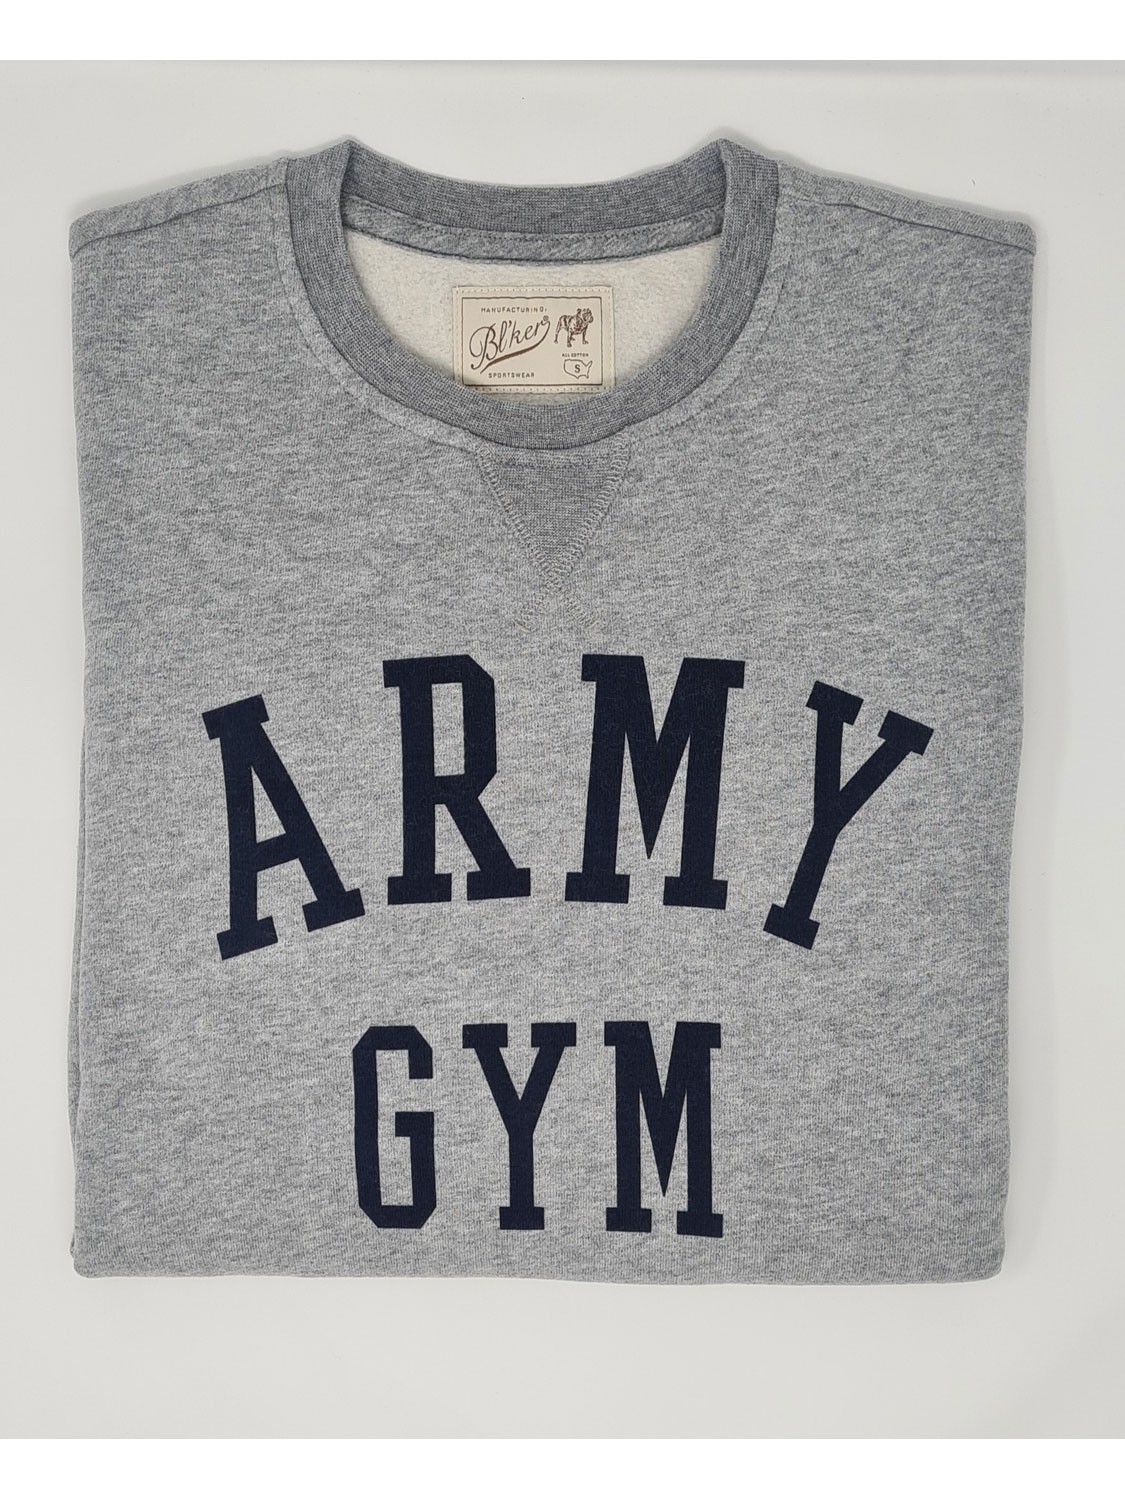 Bl'ker Men's Sweatshirt Graphic Army Gym